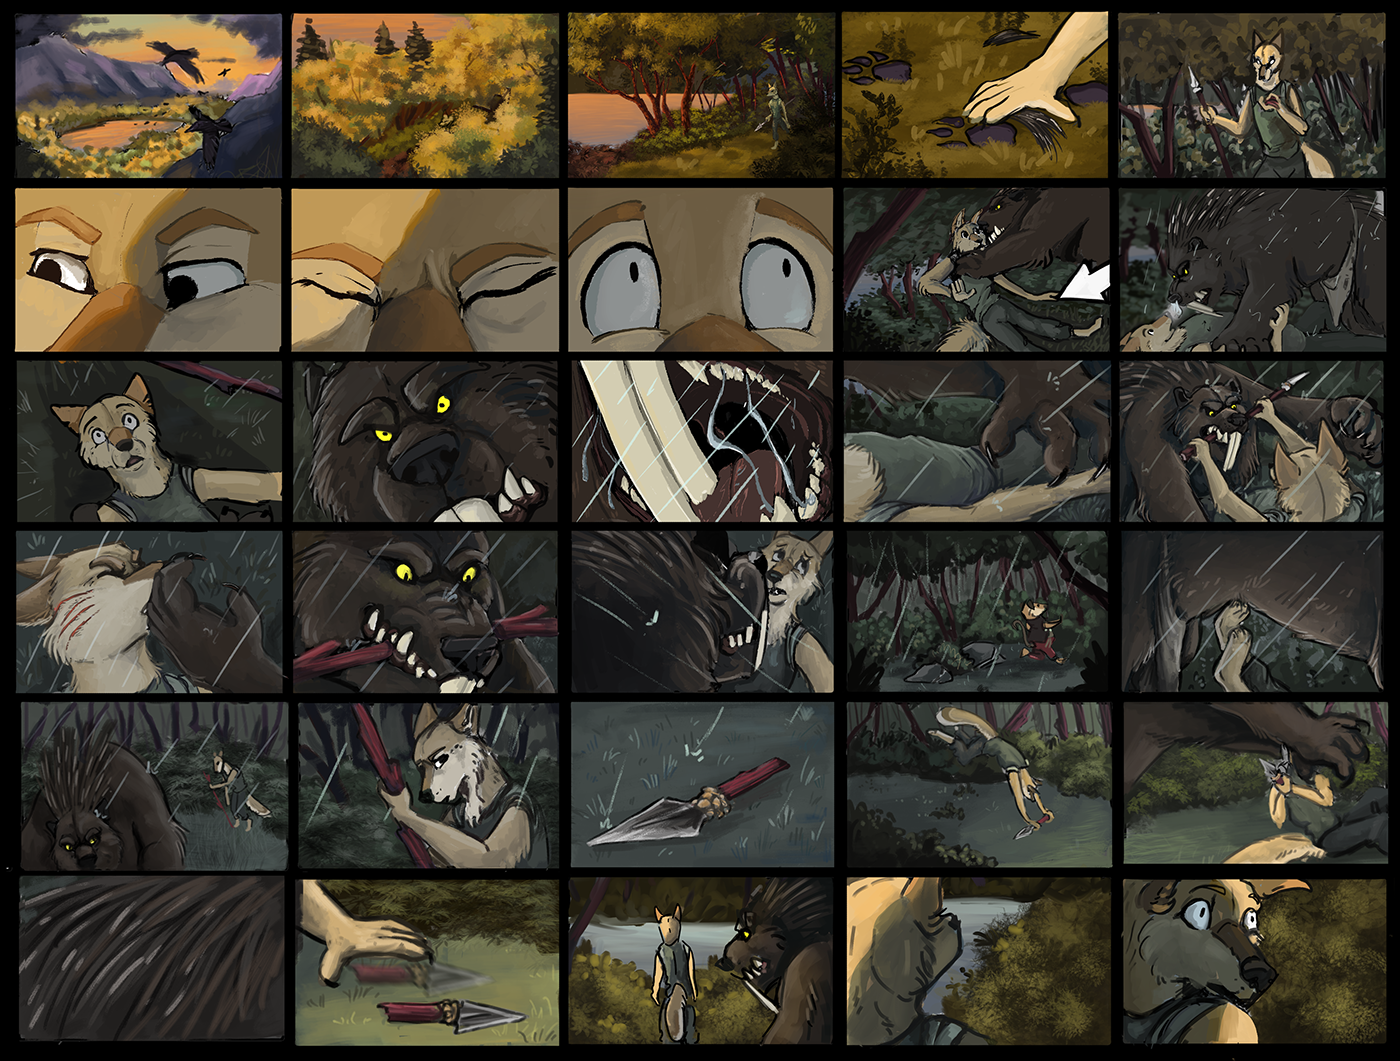 coyote folk lore story bored story Board storyboard animatic ILLUSTRATION 